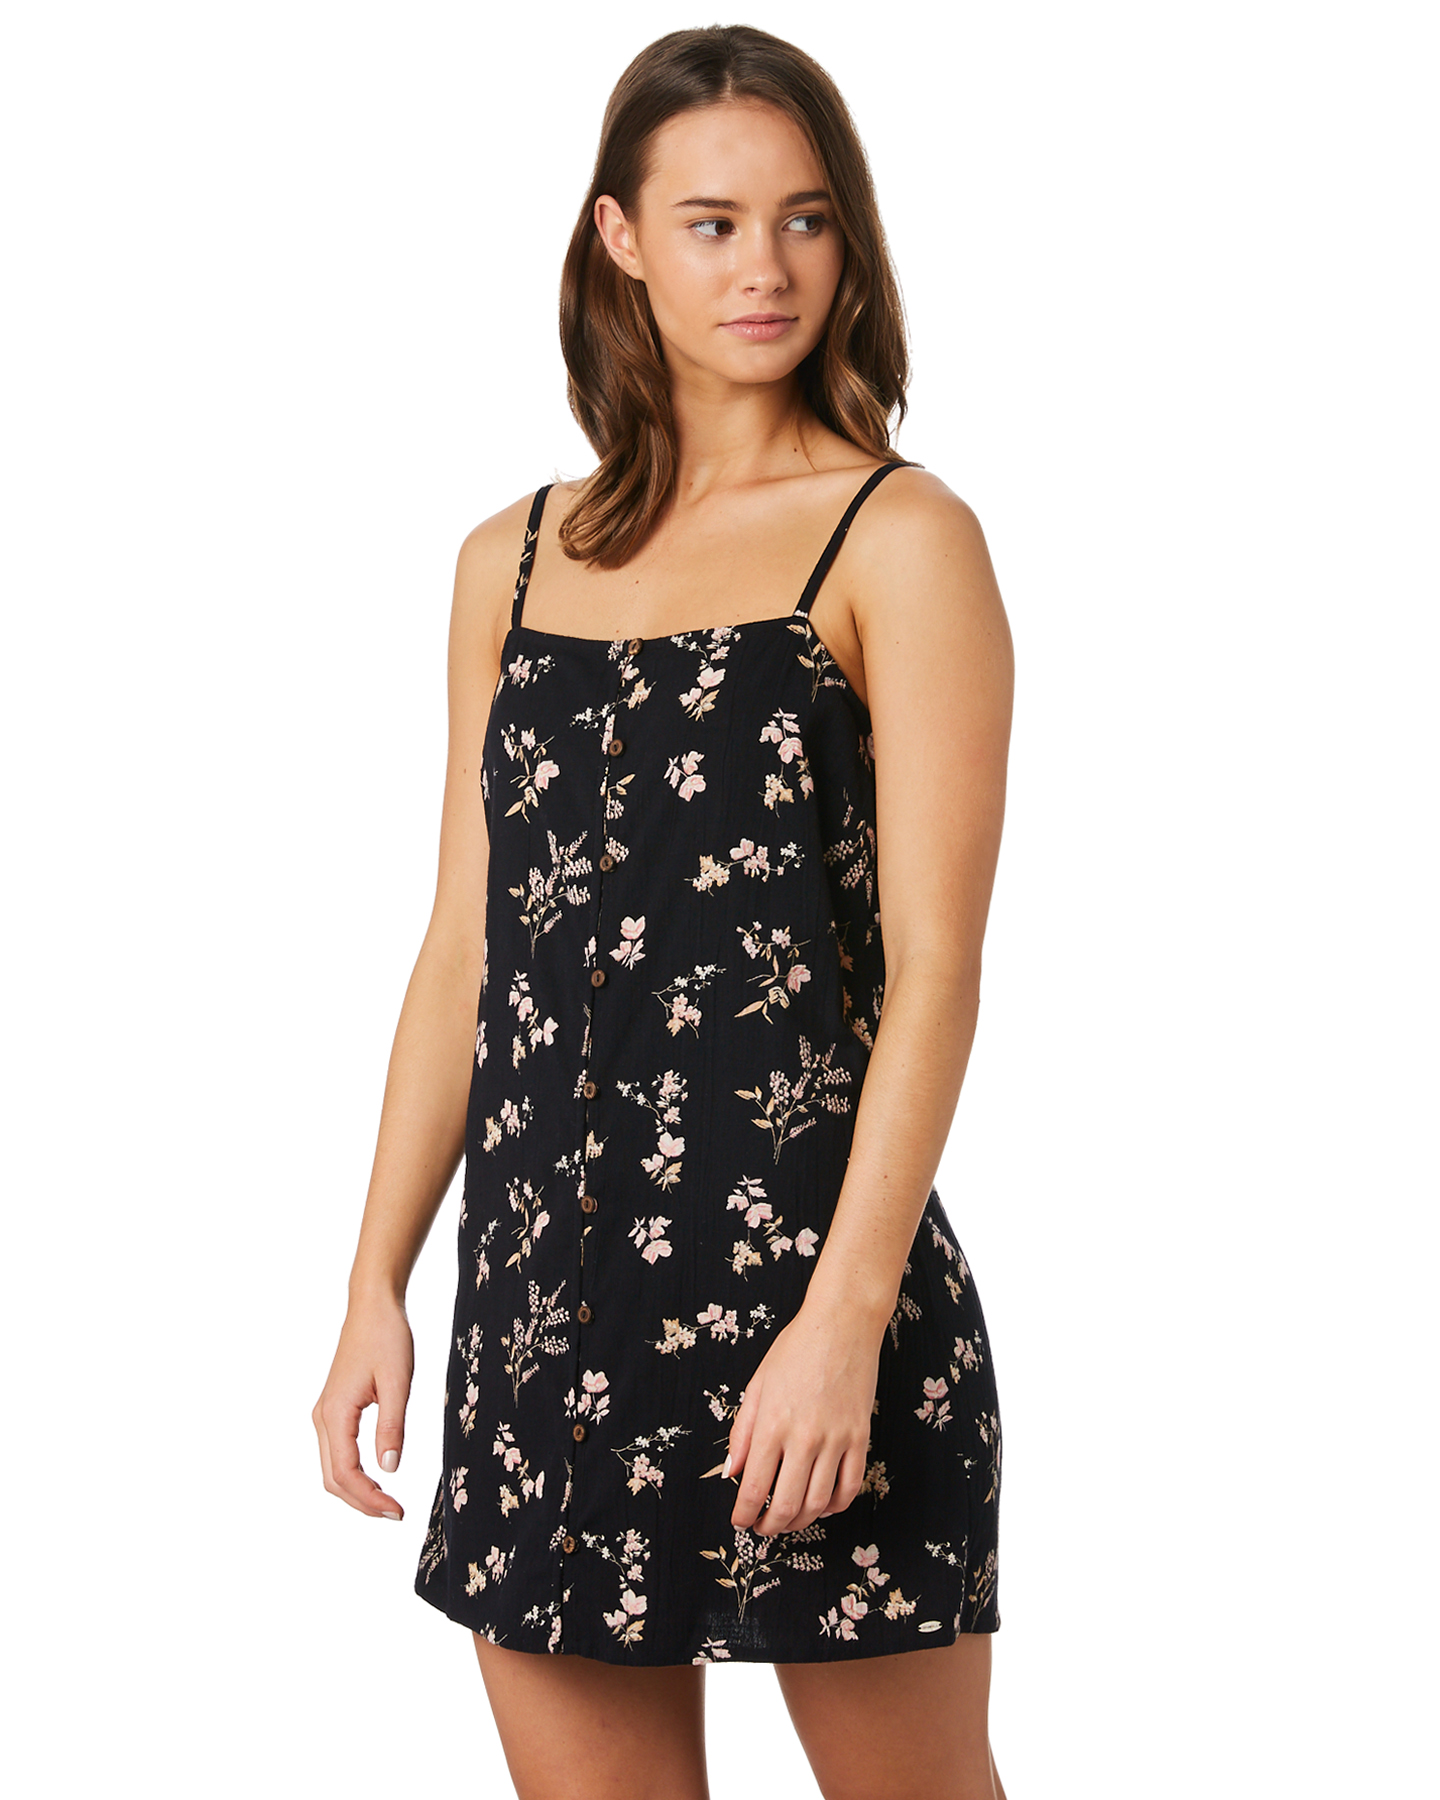 O'neill Poppy Dress - Black Floral | SurfStitch